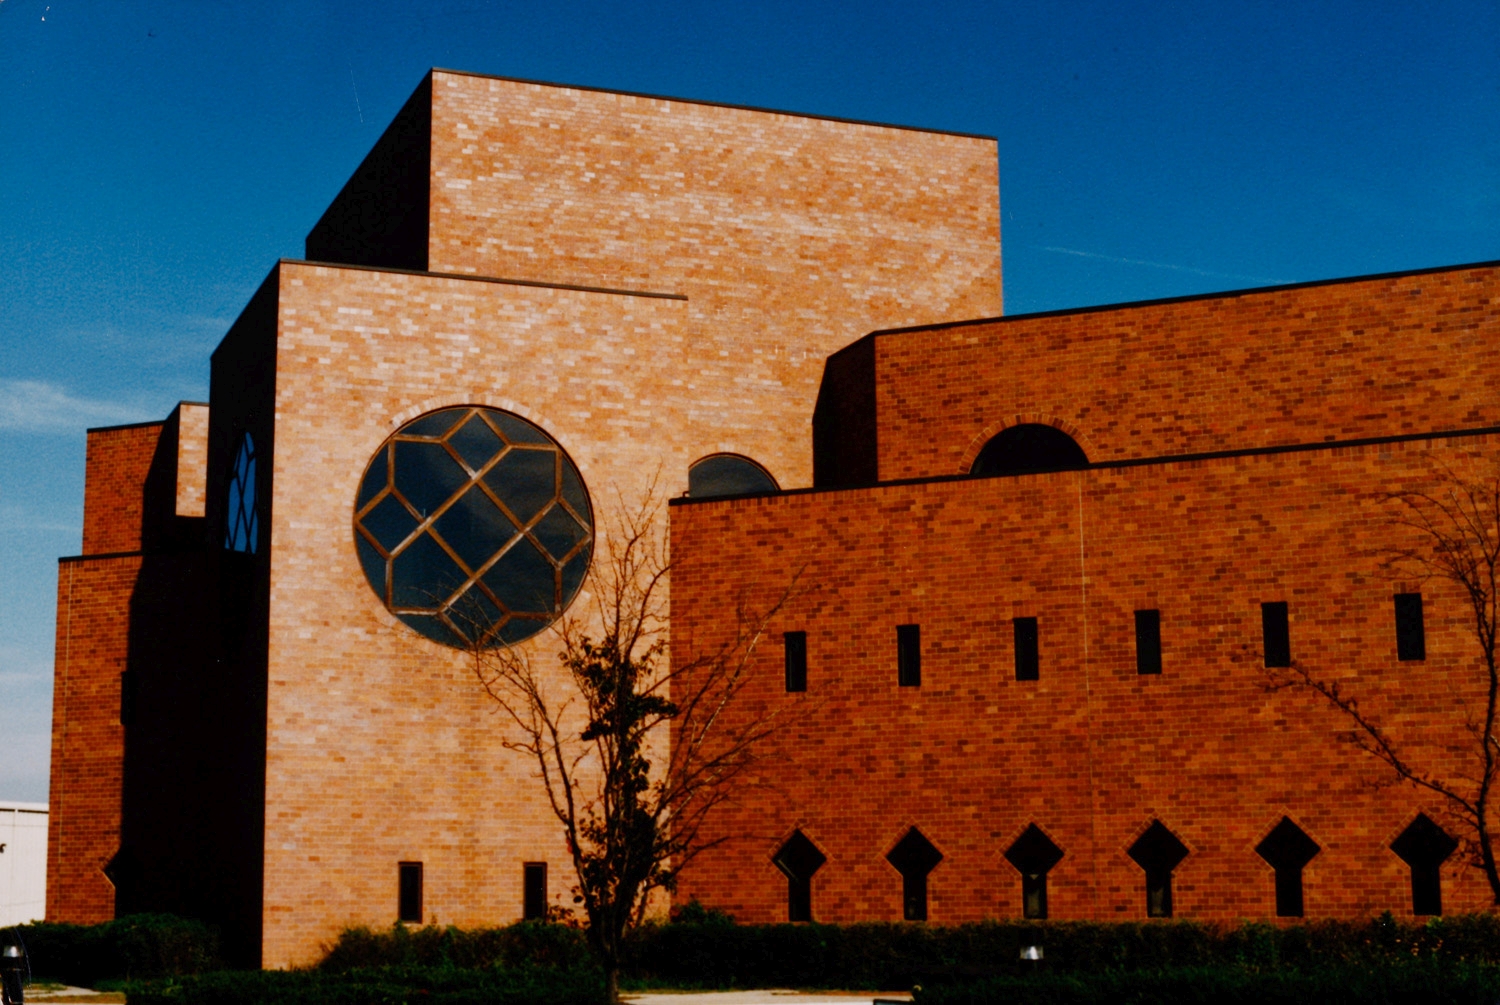 Exterior, facade with round window